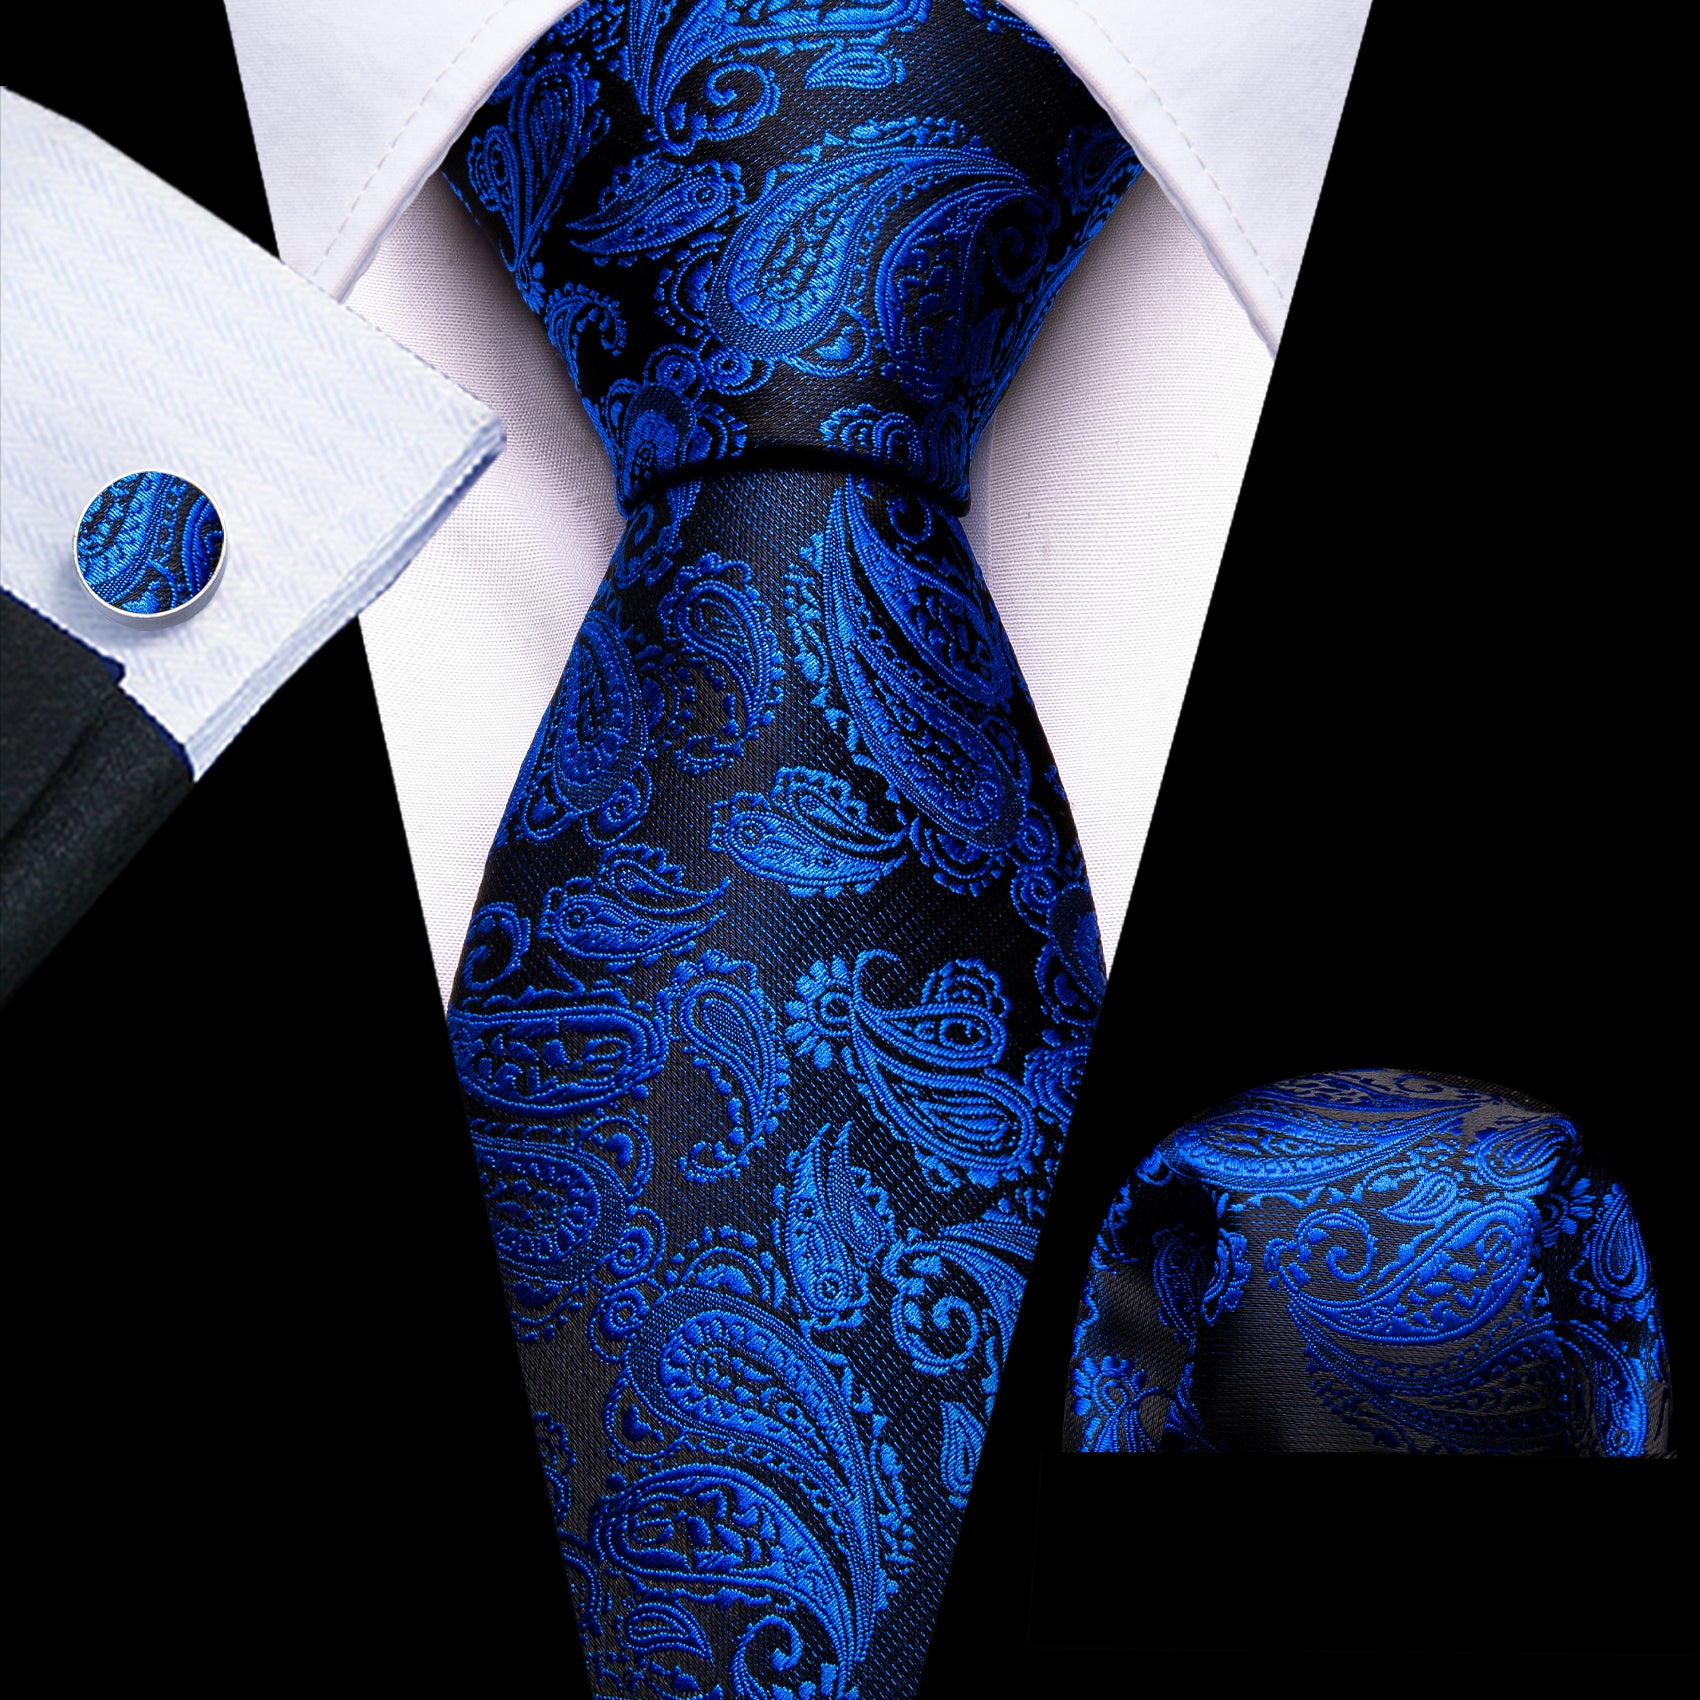 Blue Black Paisley Silk 63 Inches Extra Long Tie Pocket Square Cufflinks Set